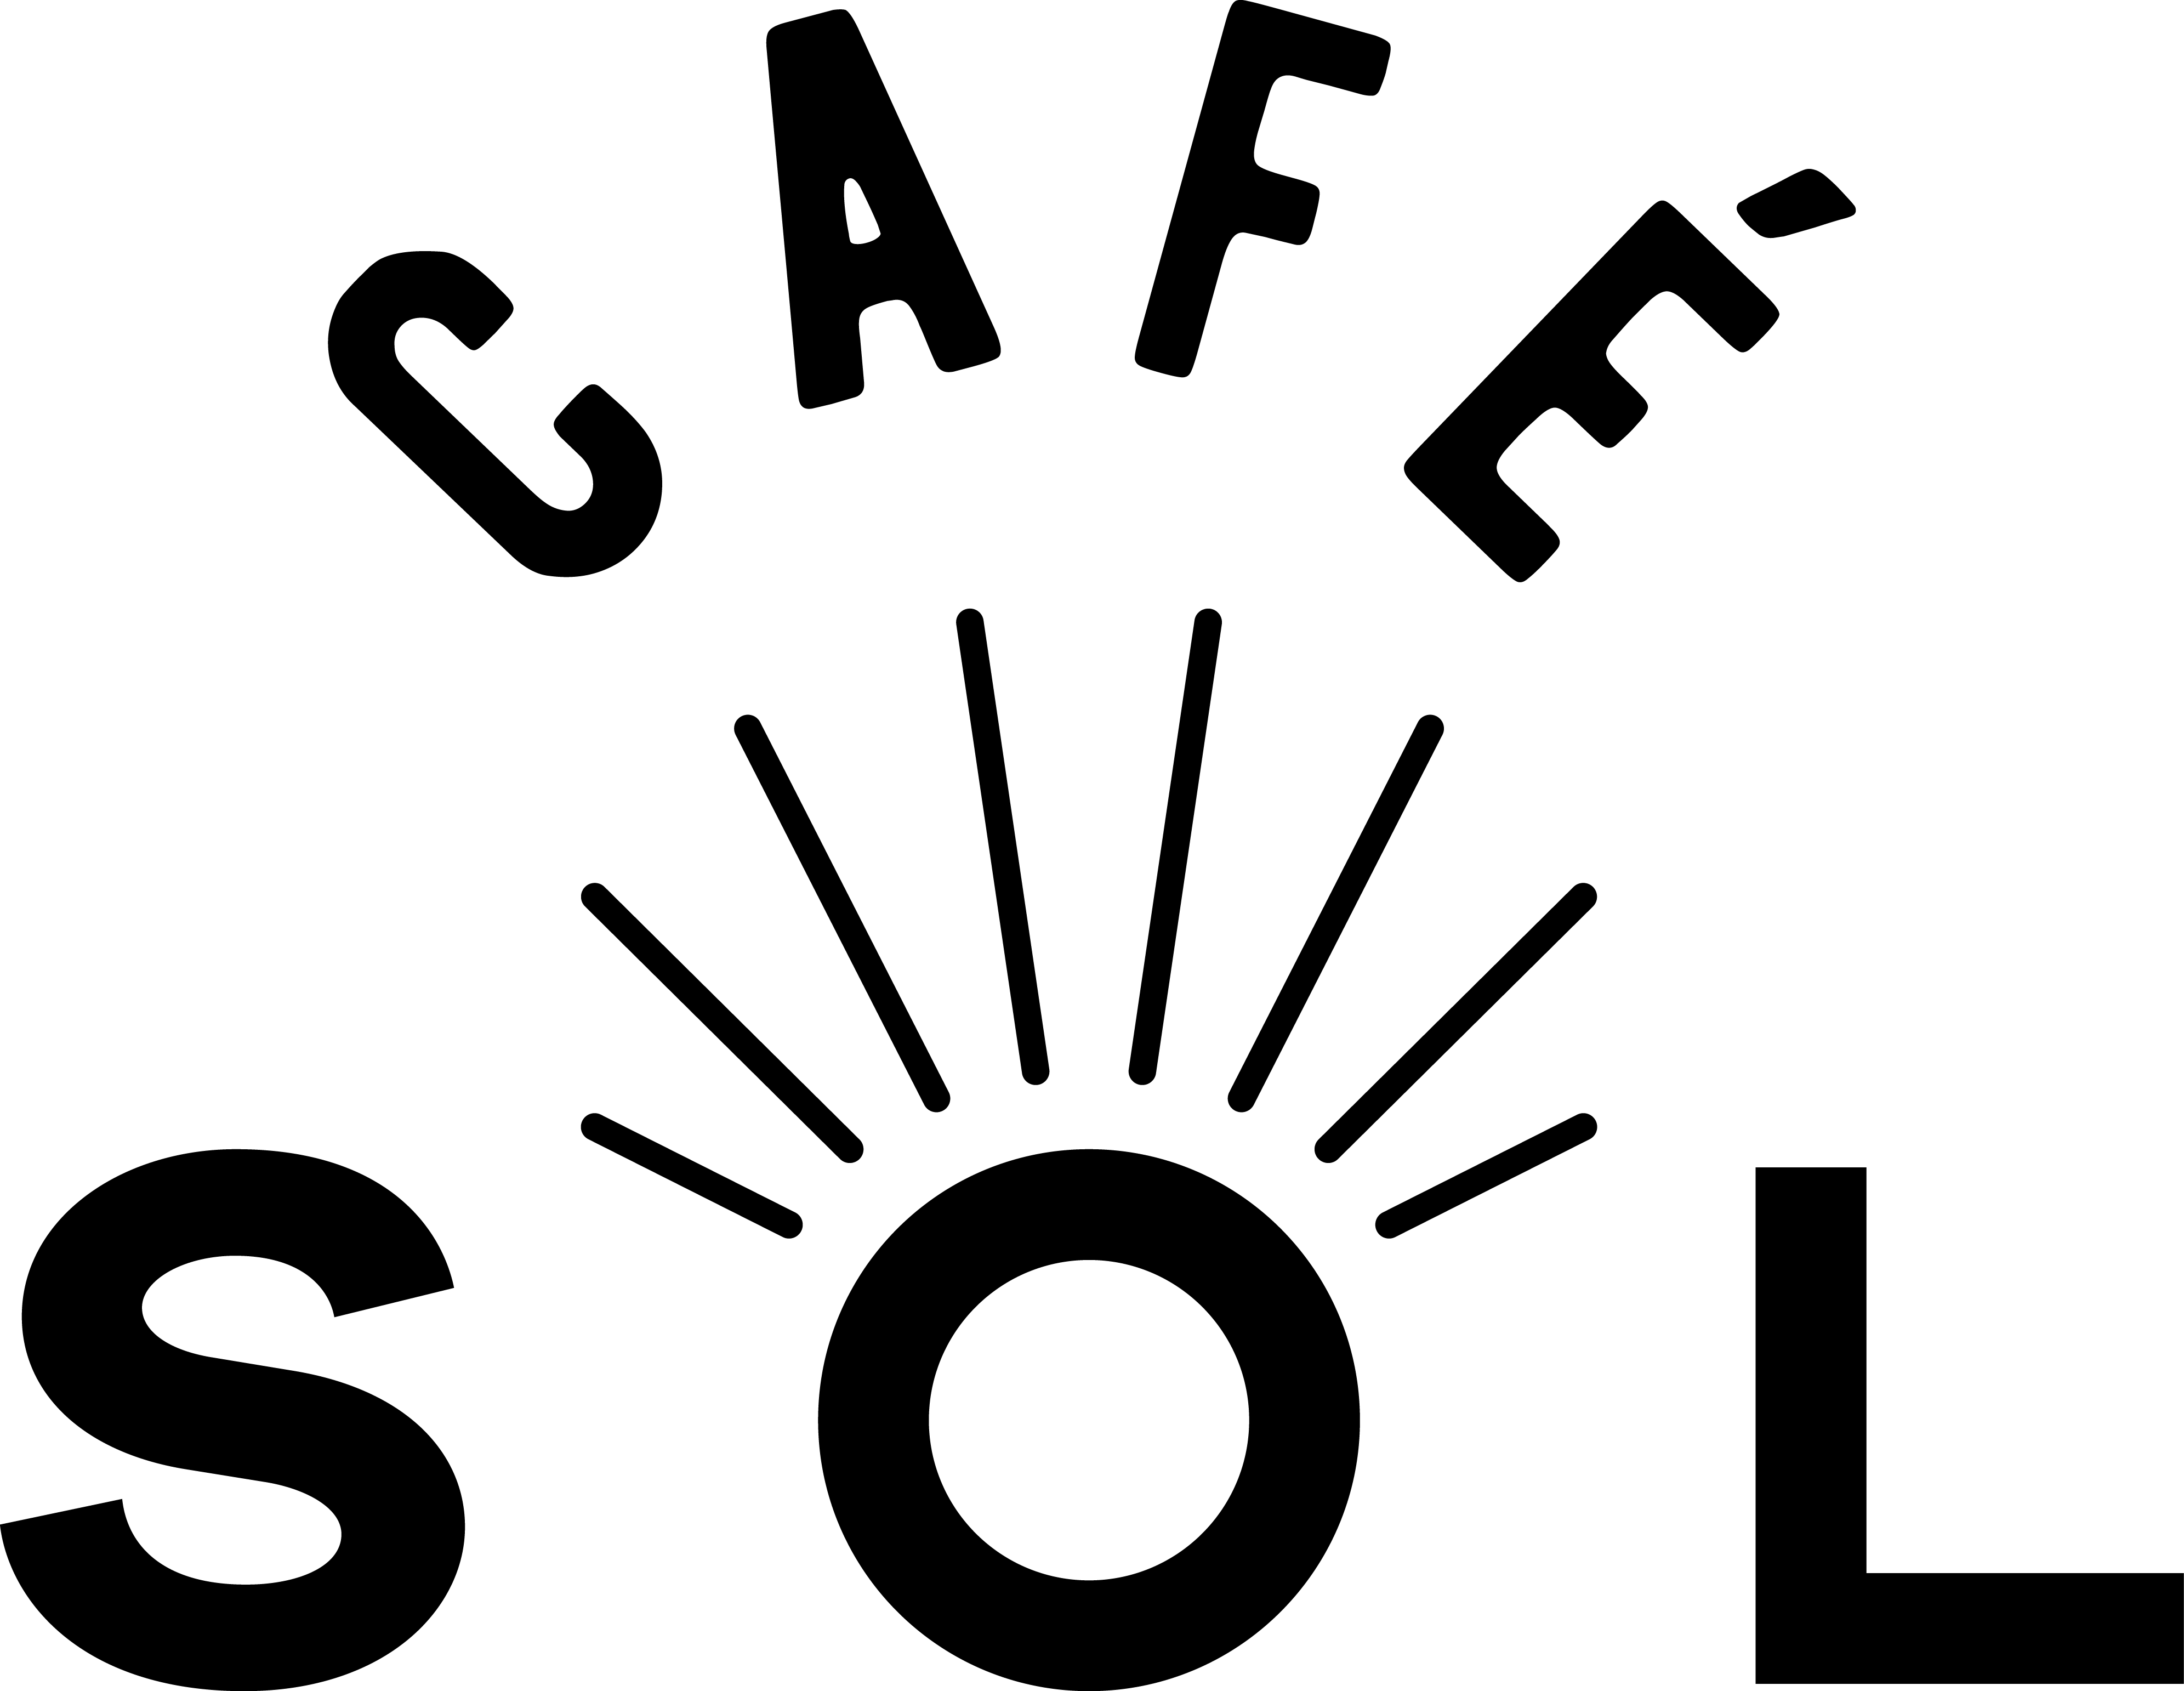 Café Sol